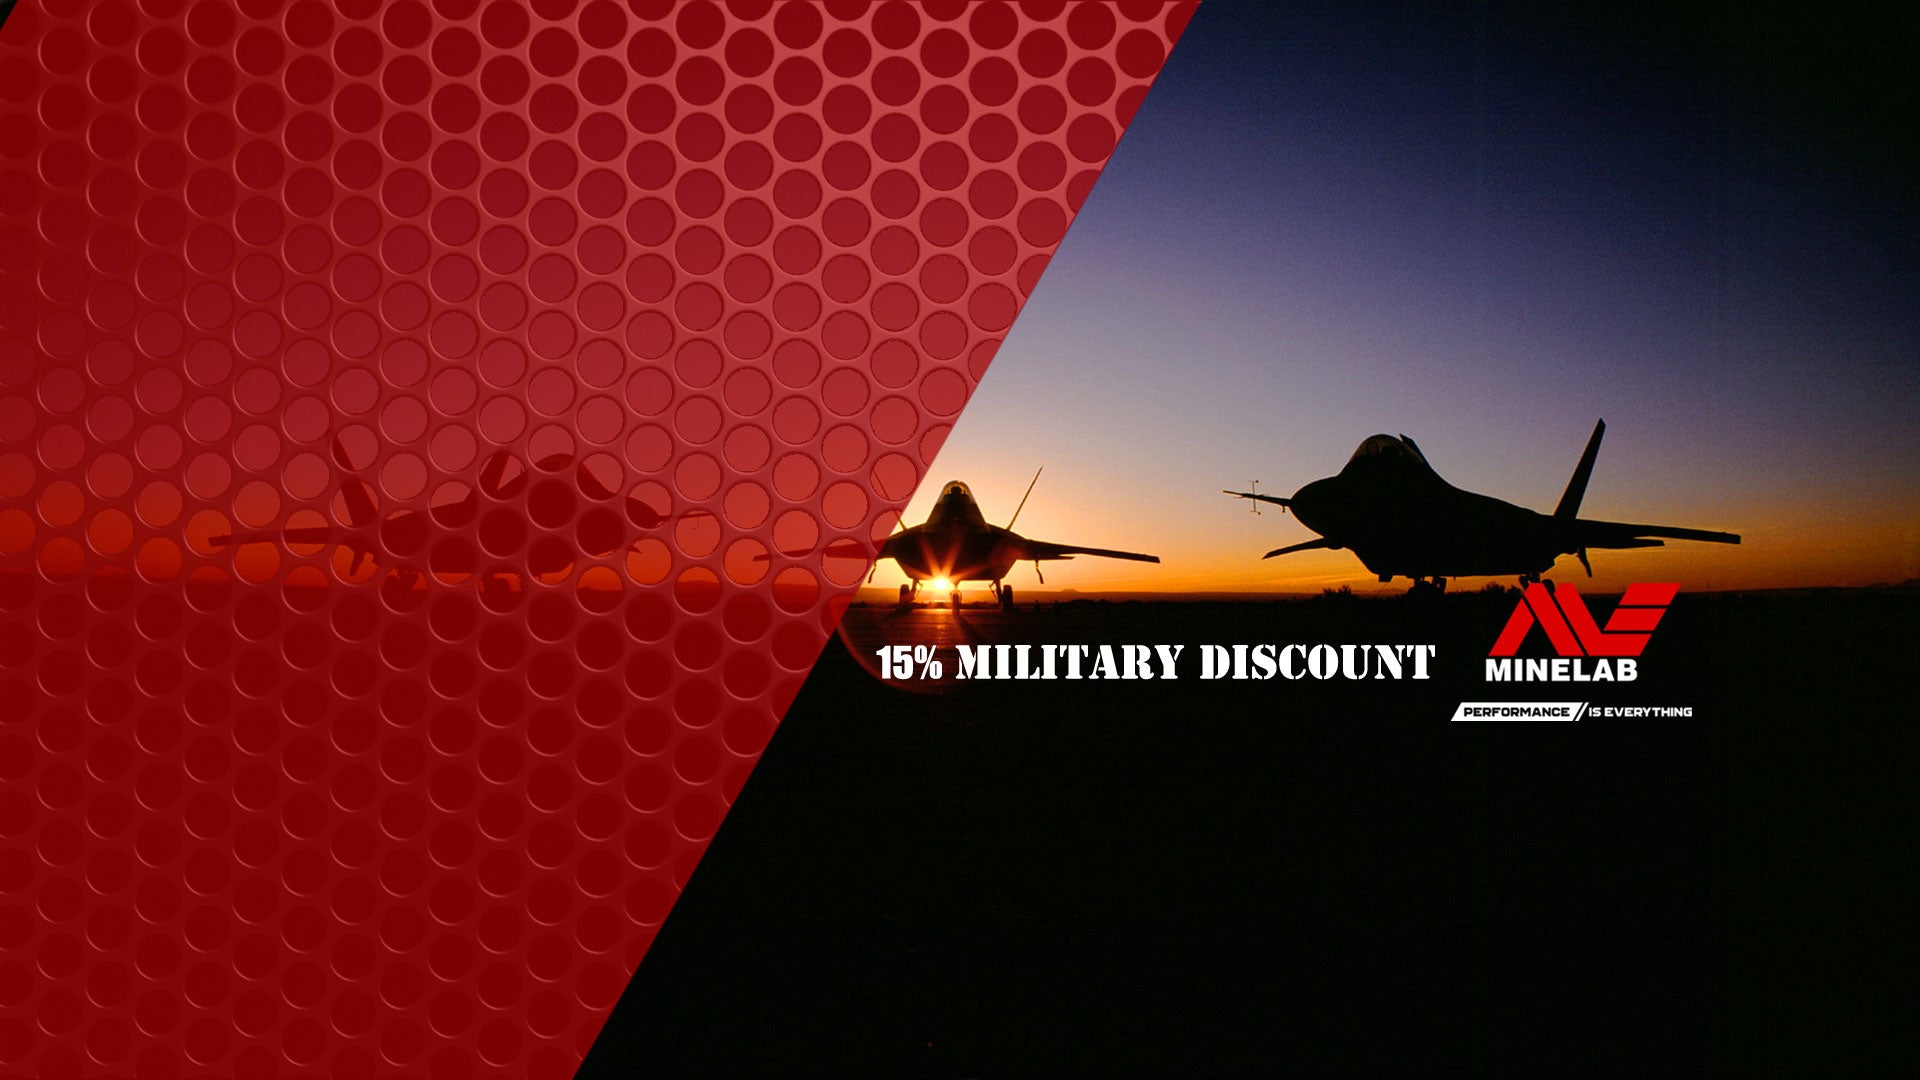 Minelab Military Discount | LMS Metal Detecting